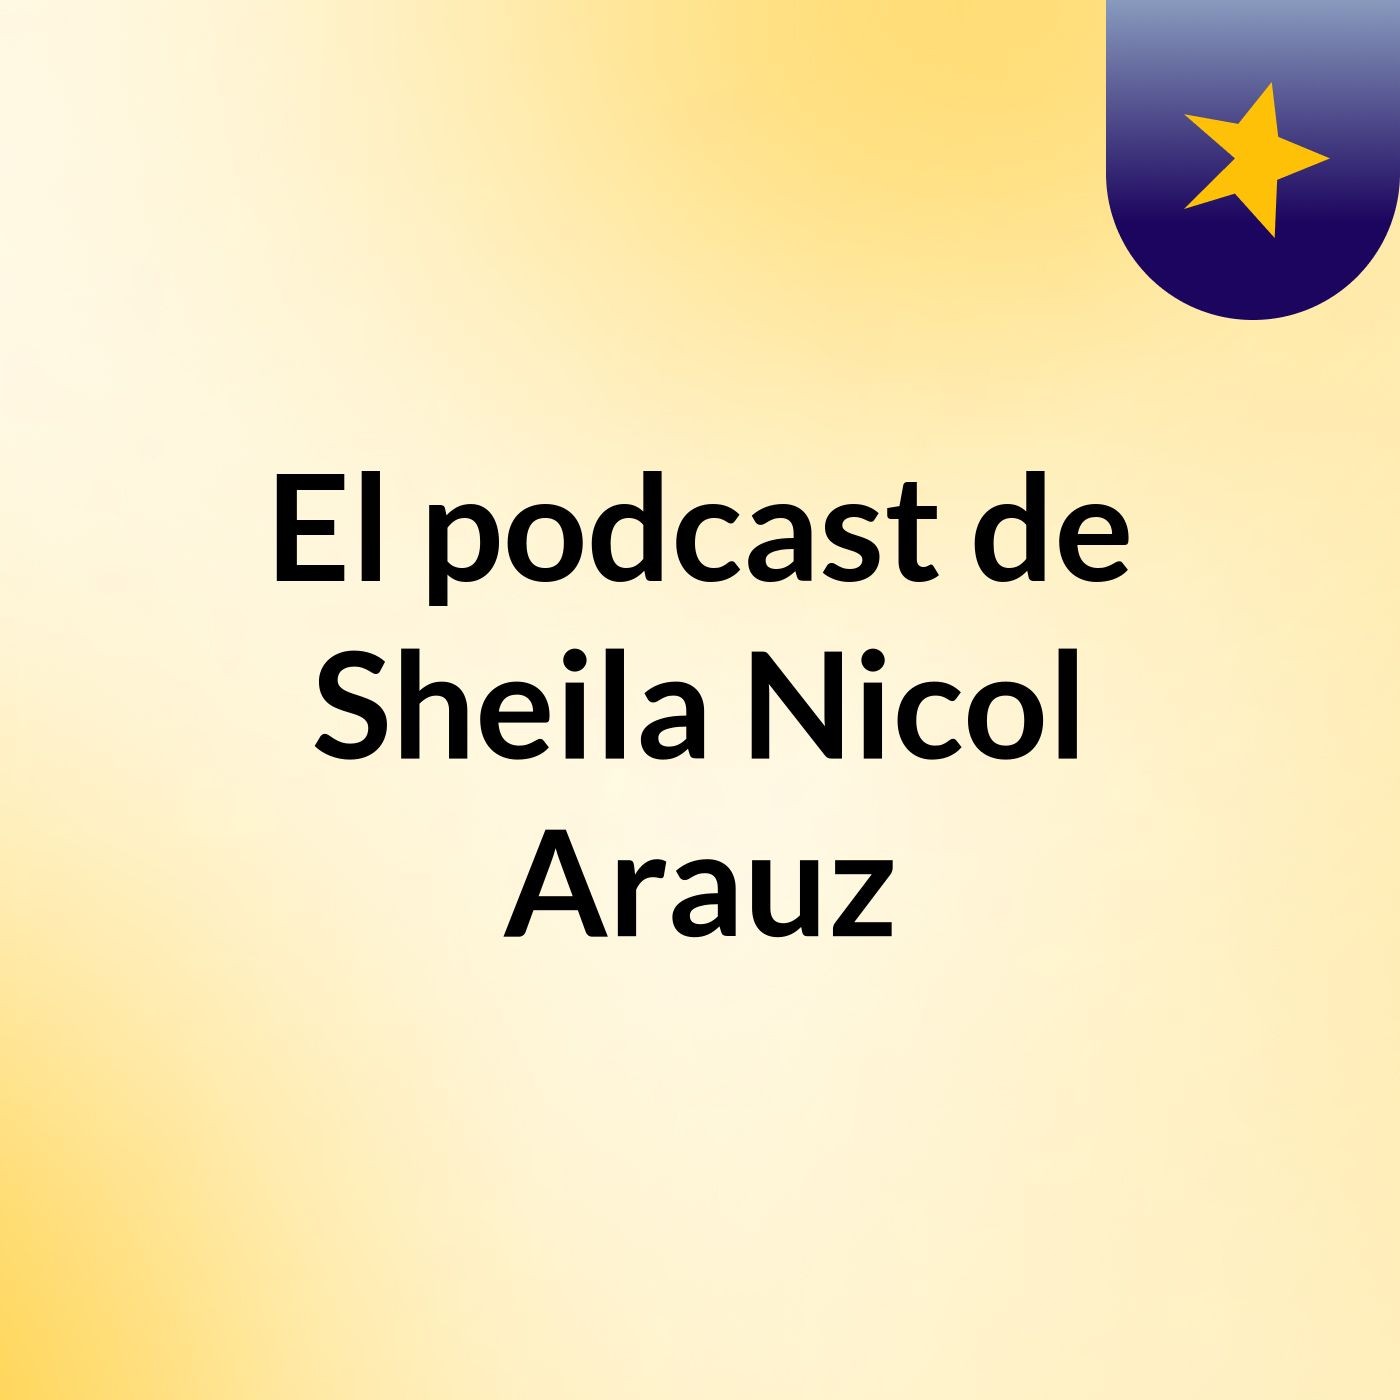 El podcast de Sheila Nicol Arauz